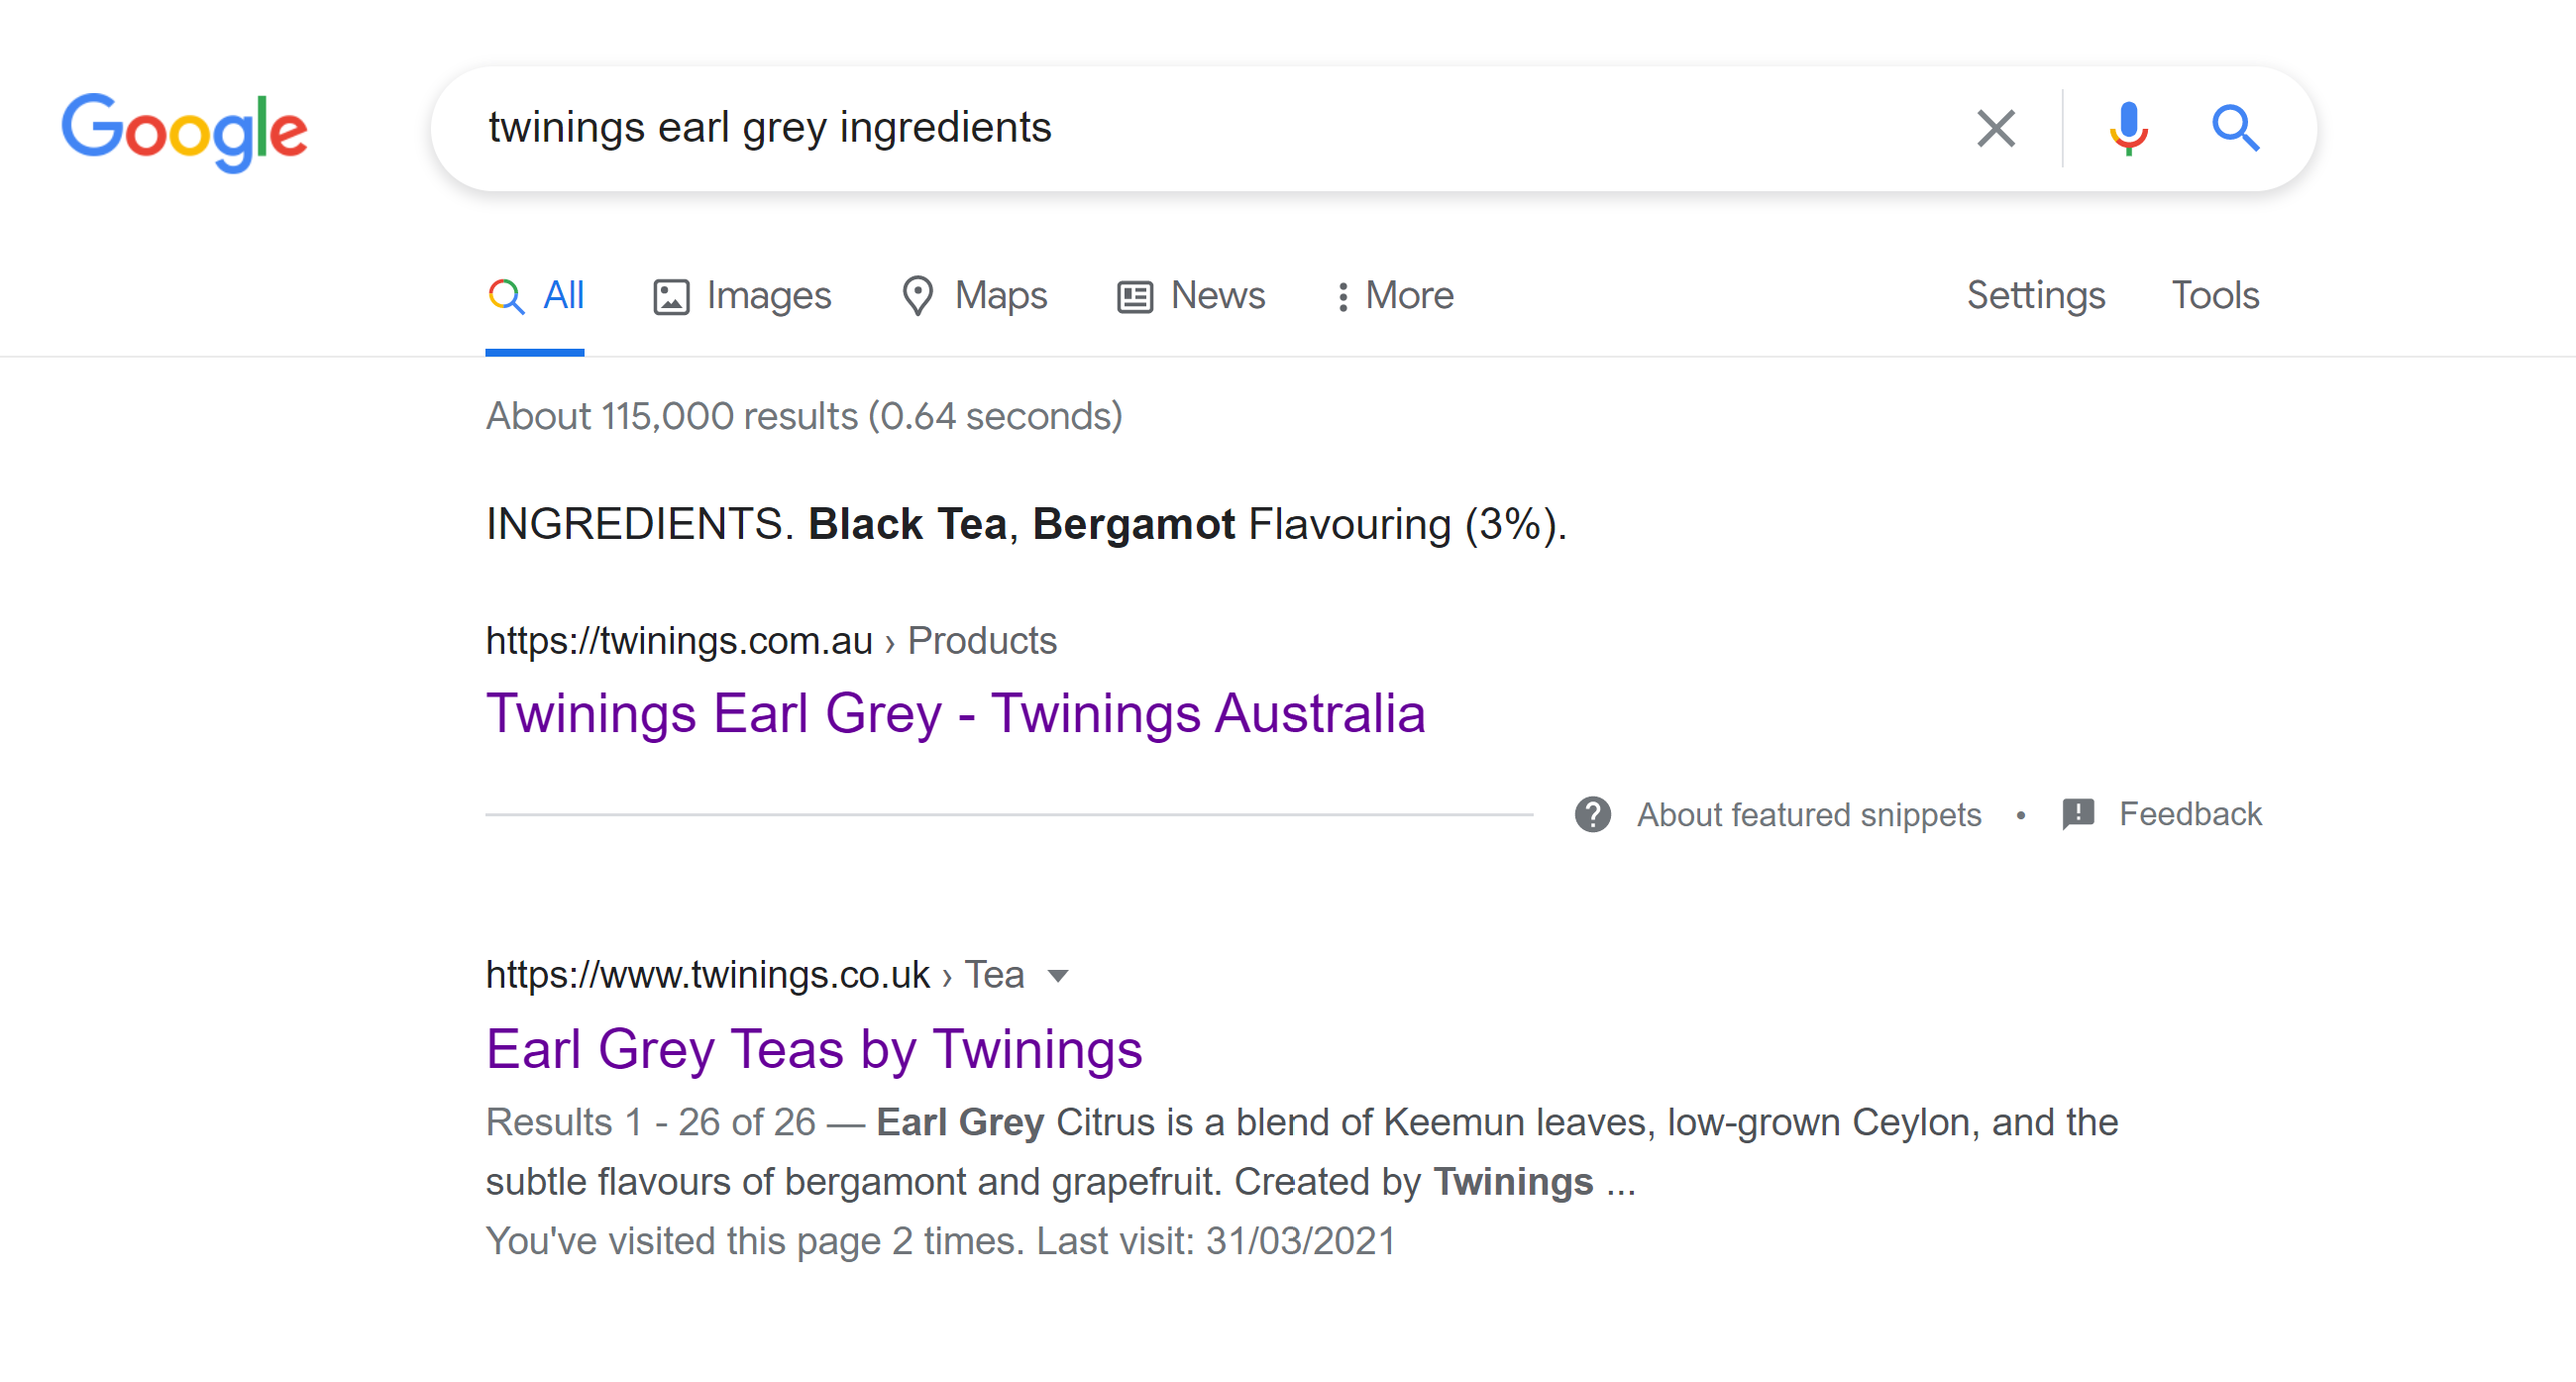 Twinings uses both Keemun and low-grown Ceylon in their Earl Grey tea.